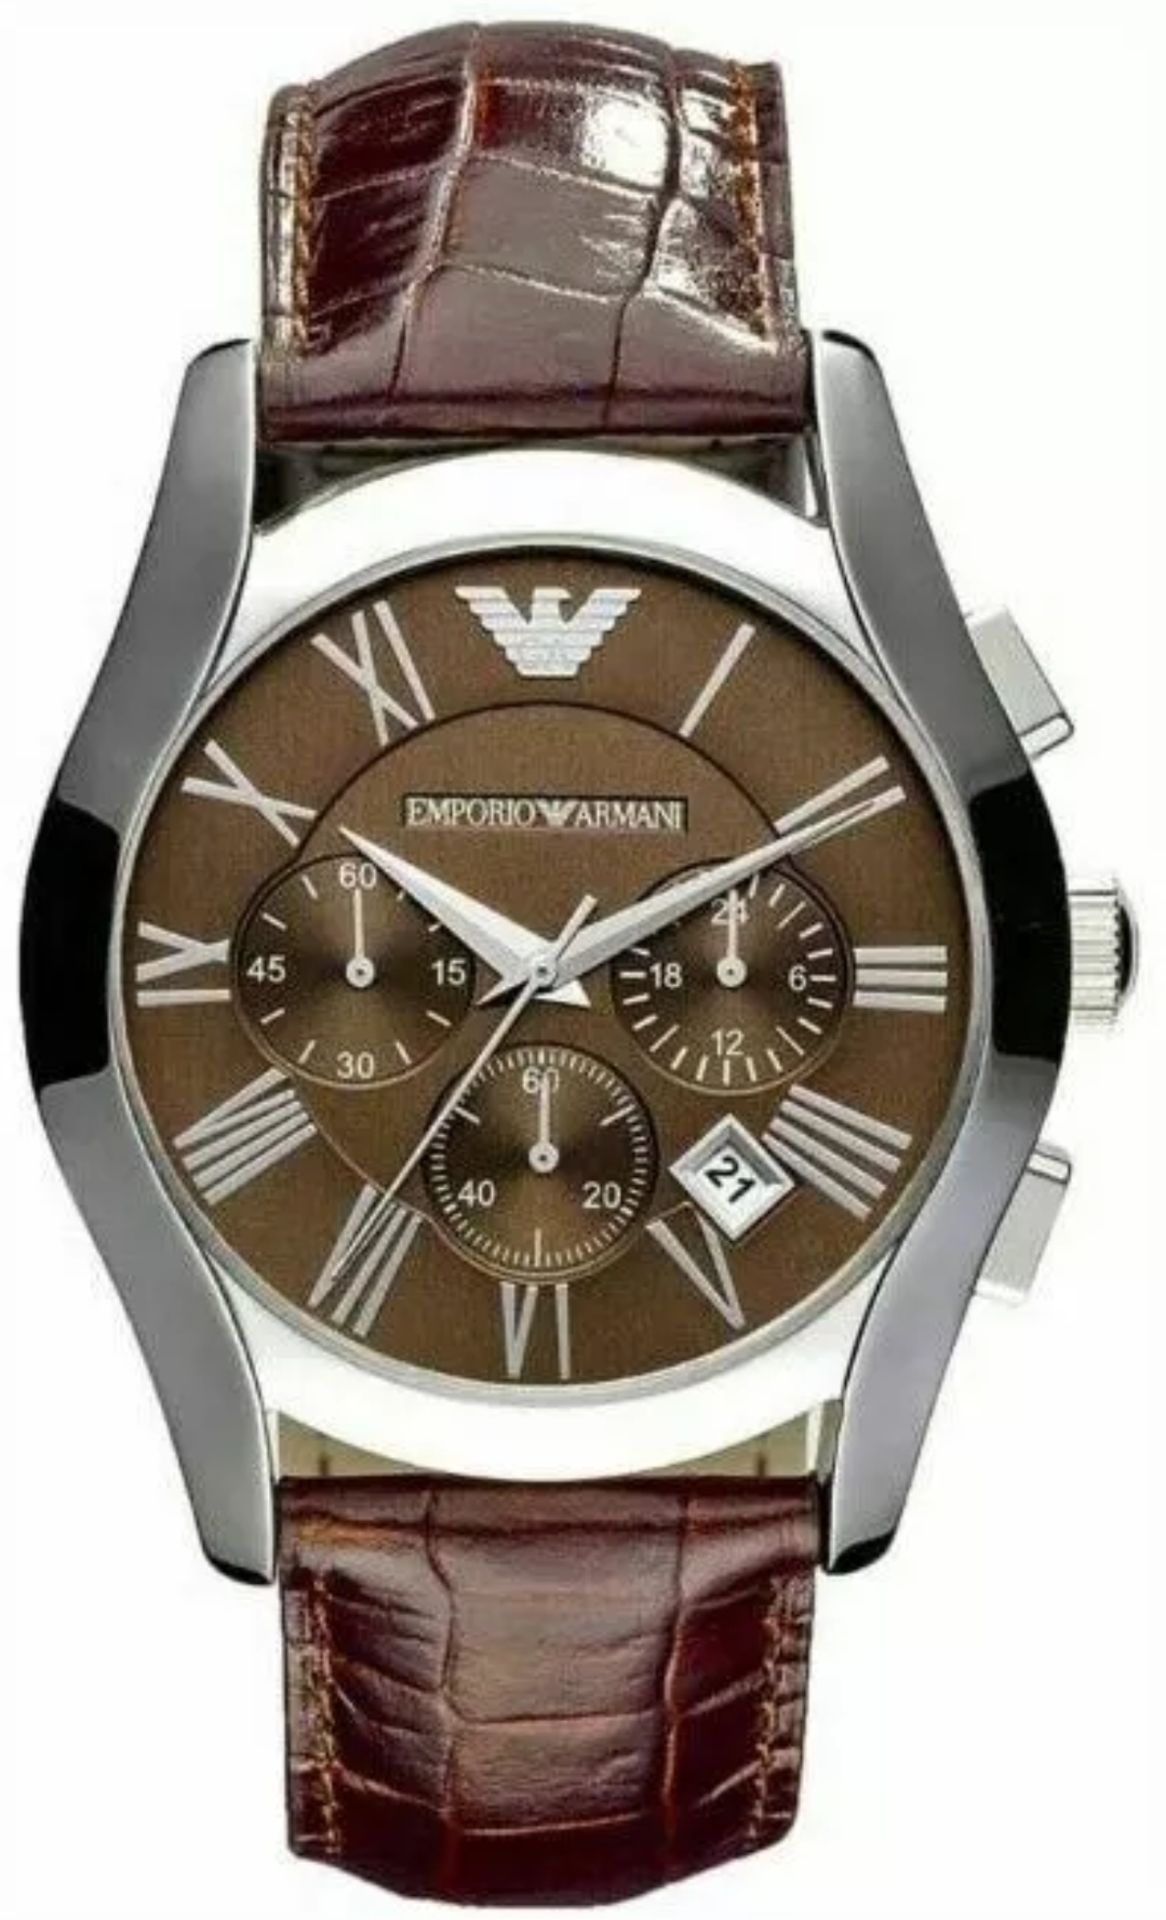 Emporio Armani AR0671 Men's Brown Leather Strap Quartz Chronograph Watch - Image 2 of 10